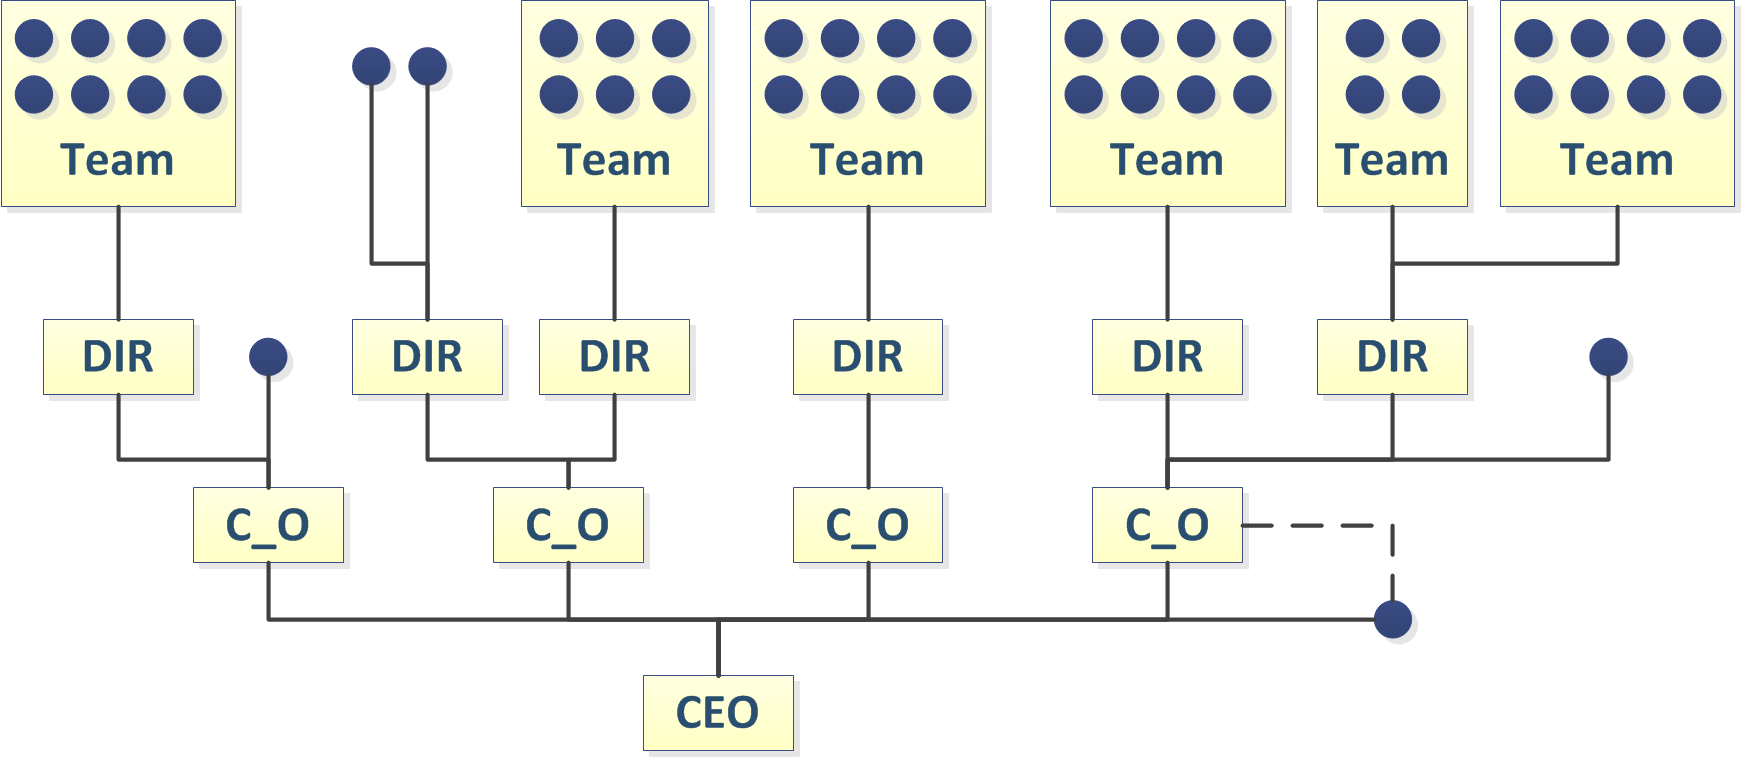 Inverted Pyramid Organizational Chart